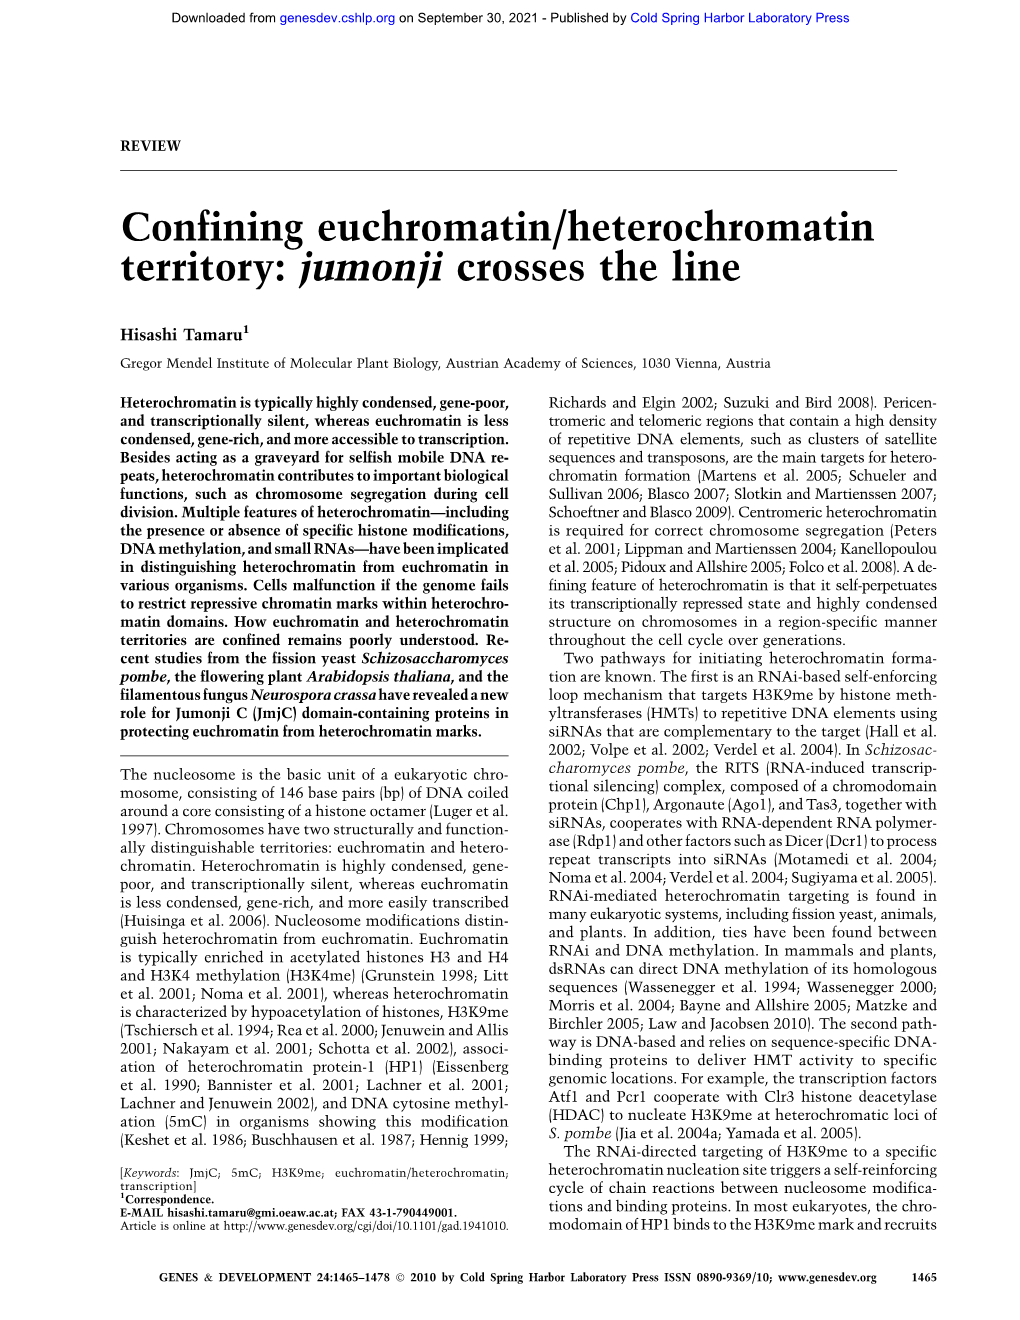 Confining Euchromatin/Heterochromatin Territory: Jumonji Crosses the Line